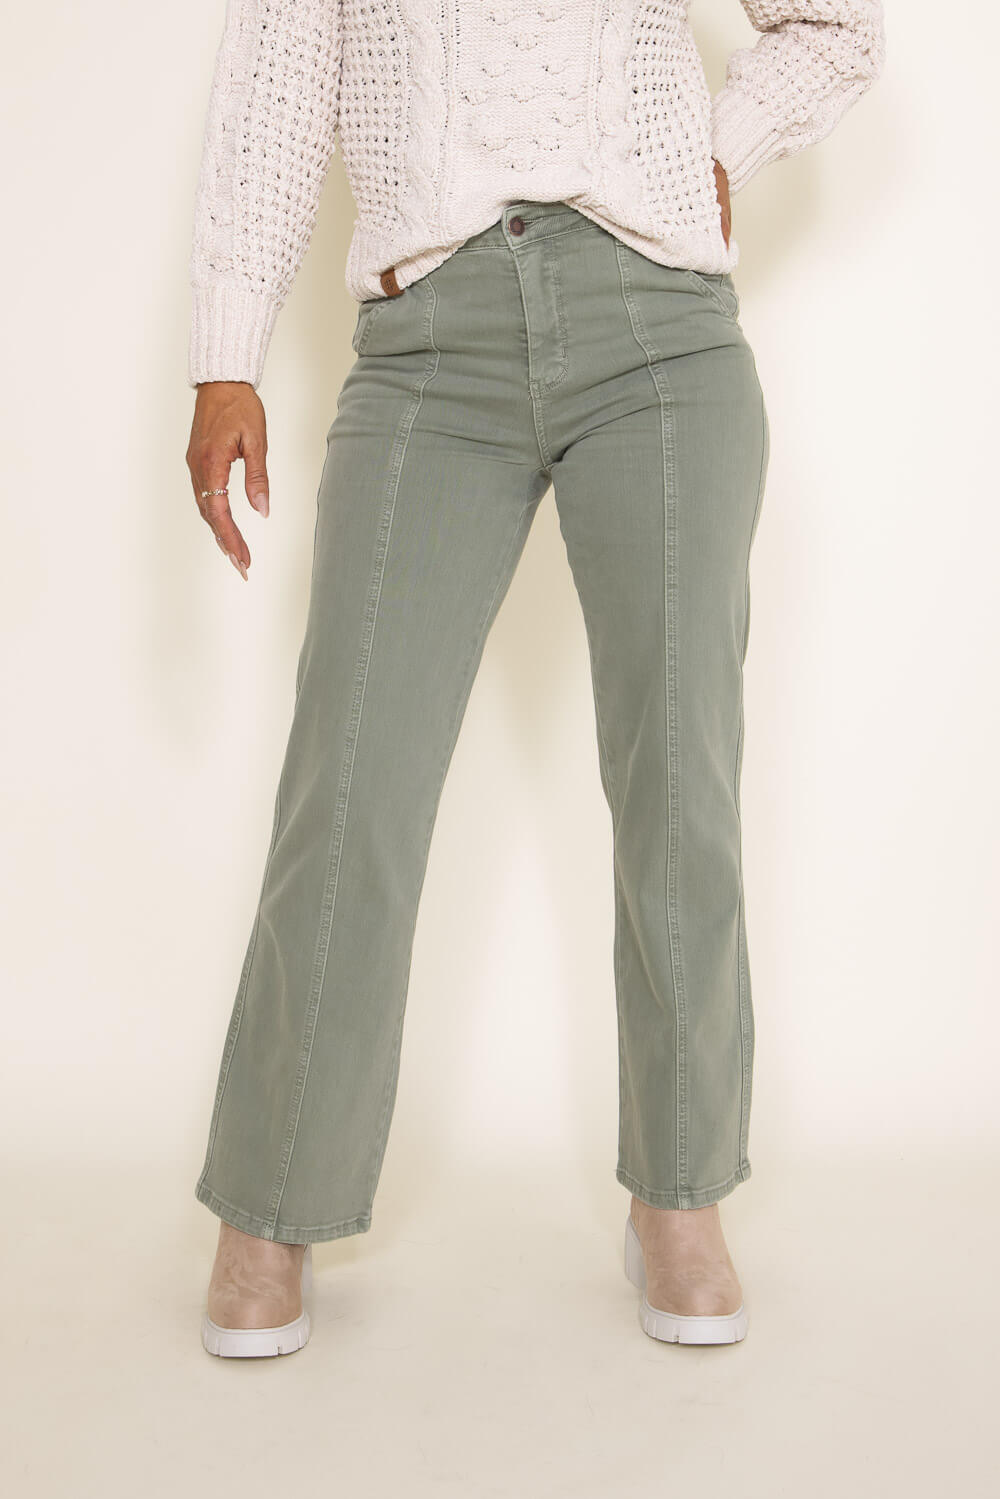 Women's Perfect Fit Pants, Straight-Leg | Pants at L.L.Bean